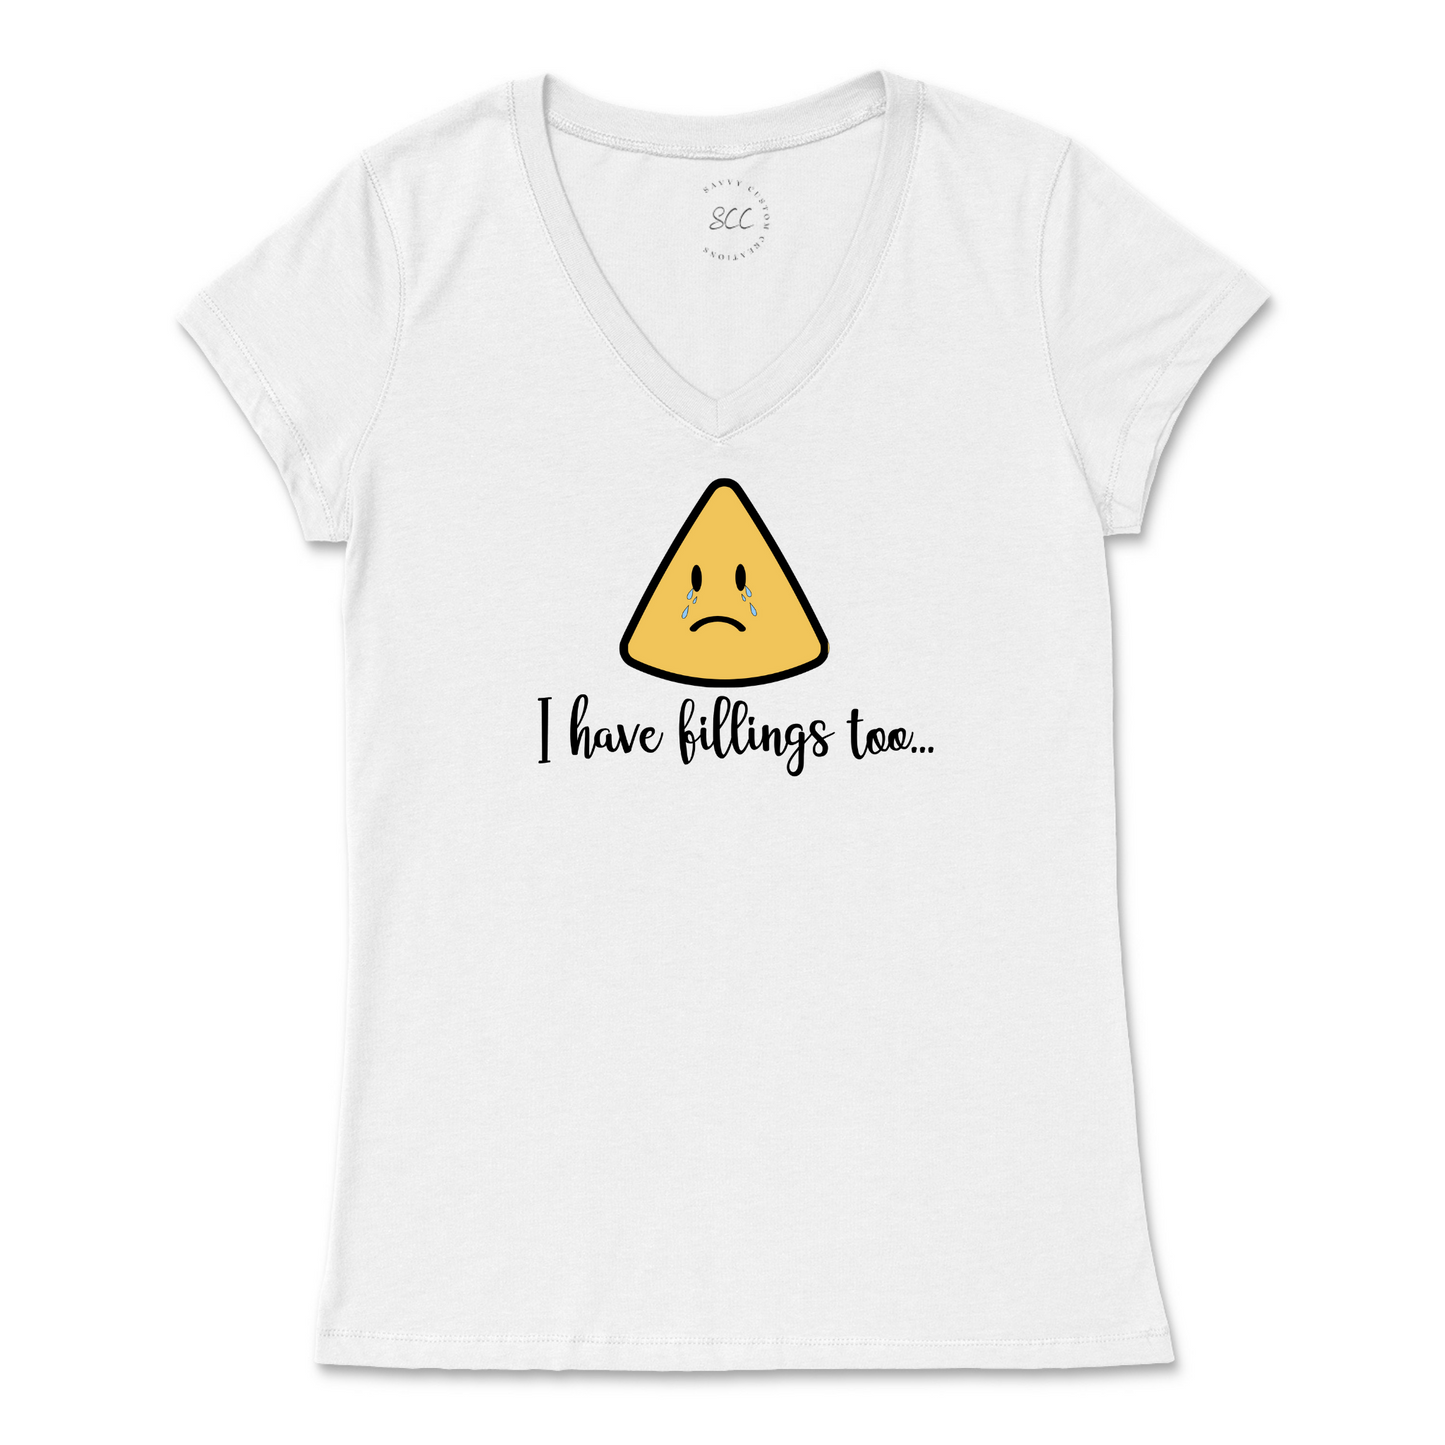 I have fillings too… - Women’s VNeck T-Shirt